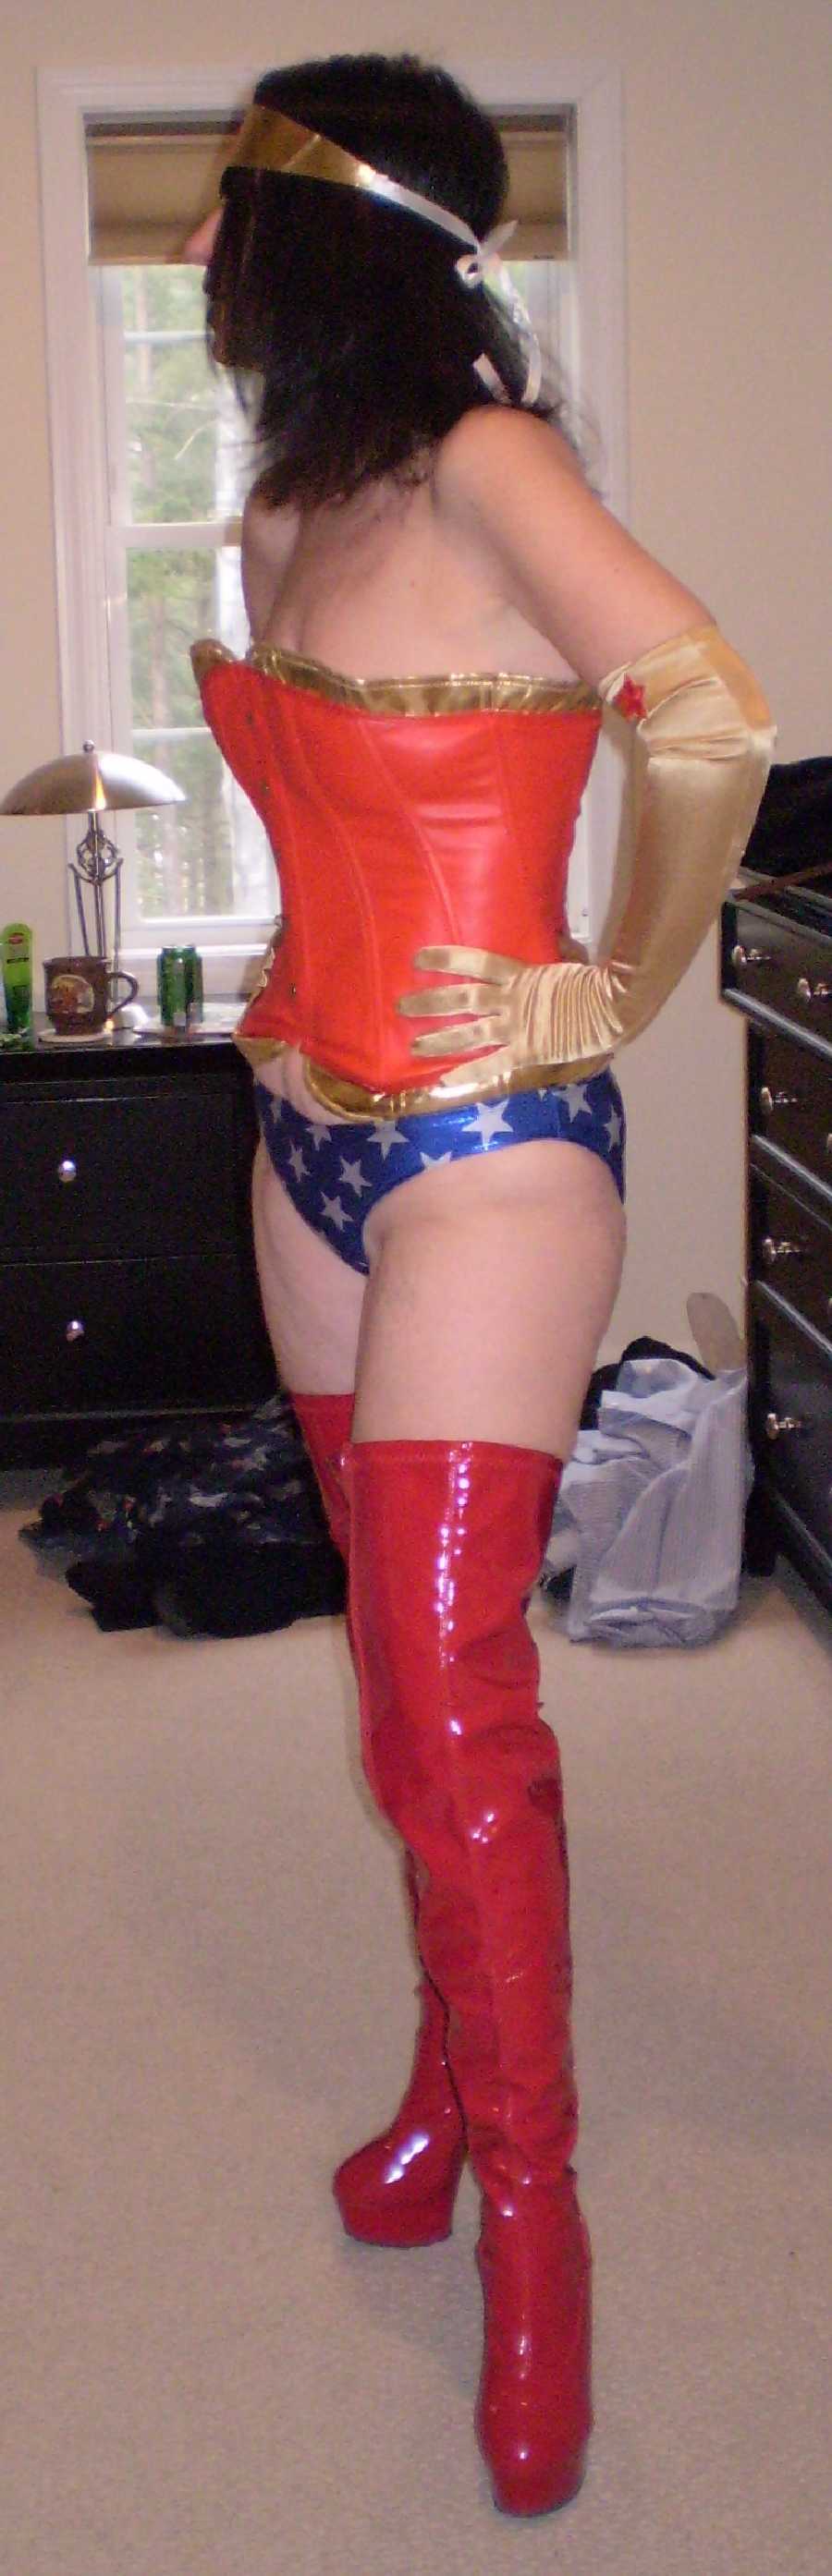 Wonder Woman Fantasy Play